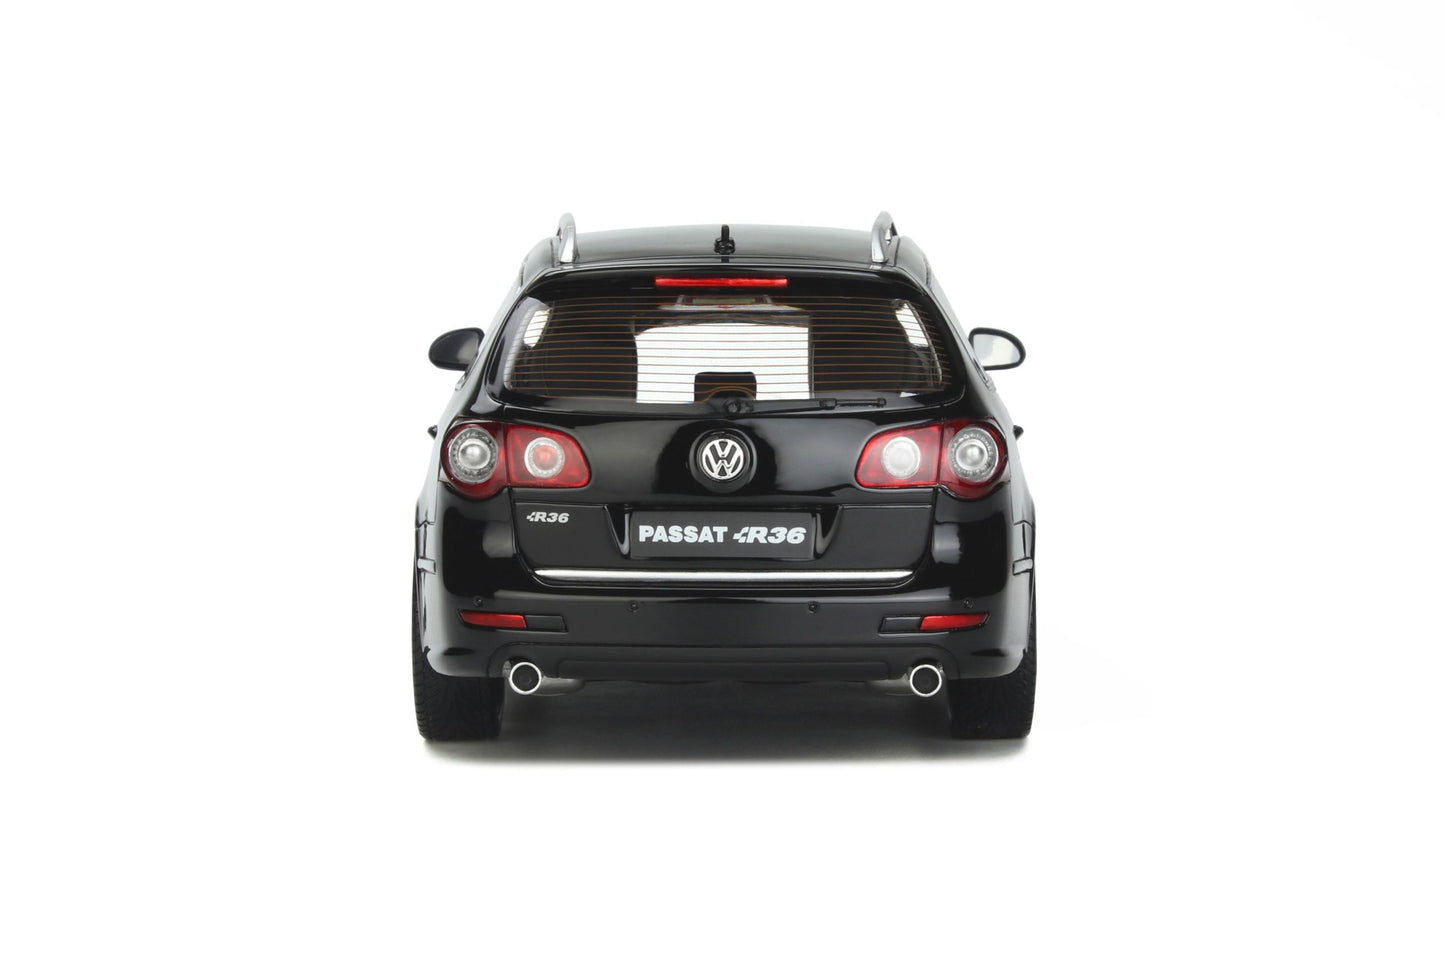 OttOmobile - Volkswagen Passat R36 Variant (B6) (Deep Black Metallic) 1:18 Scale Model Car